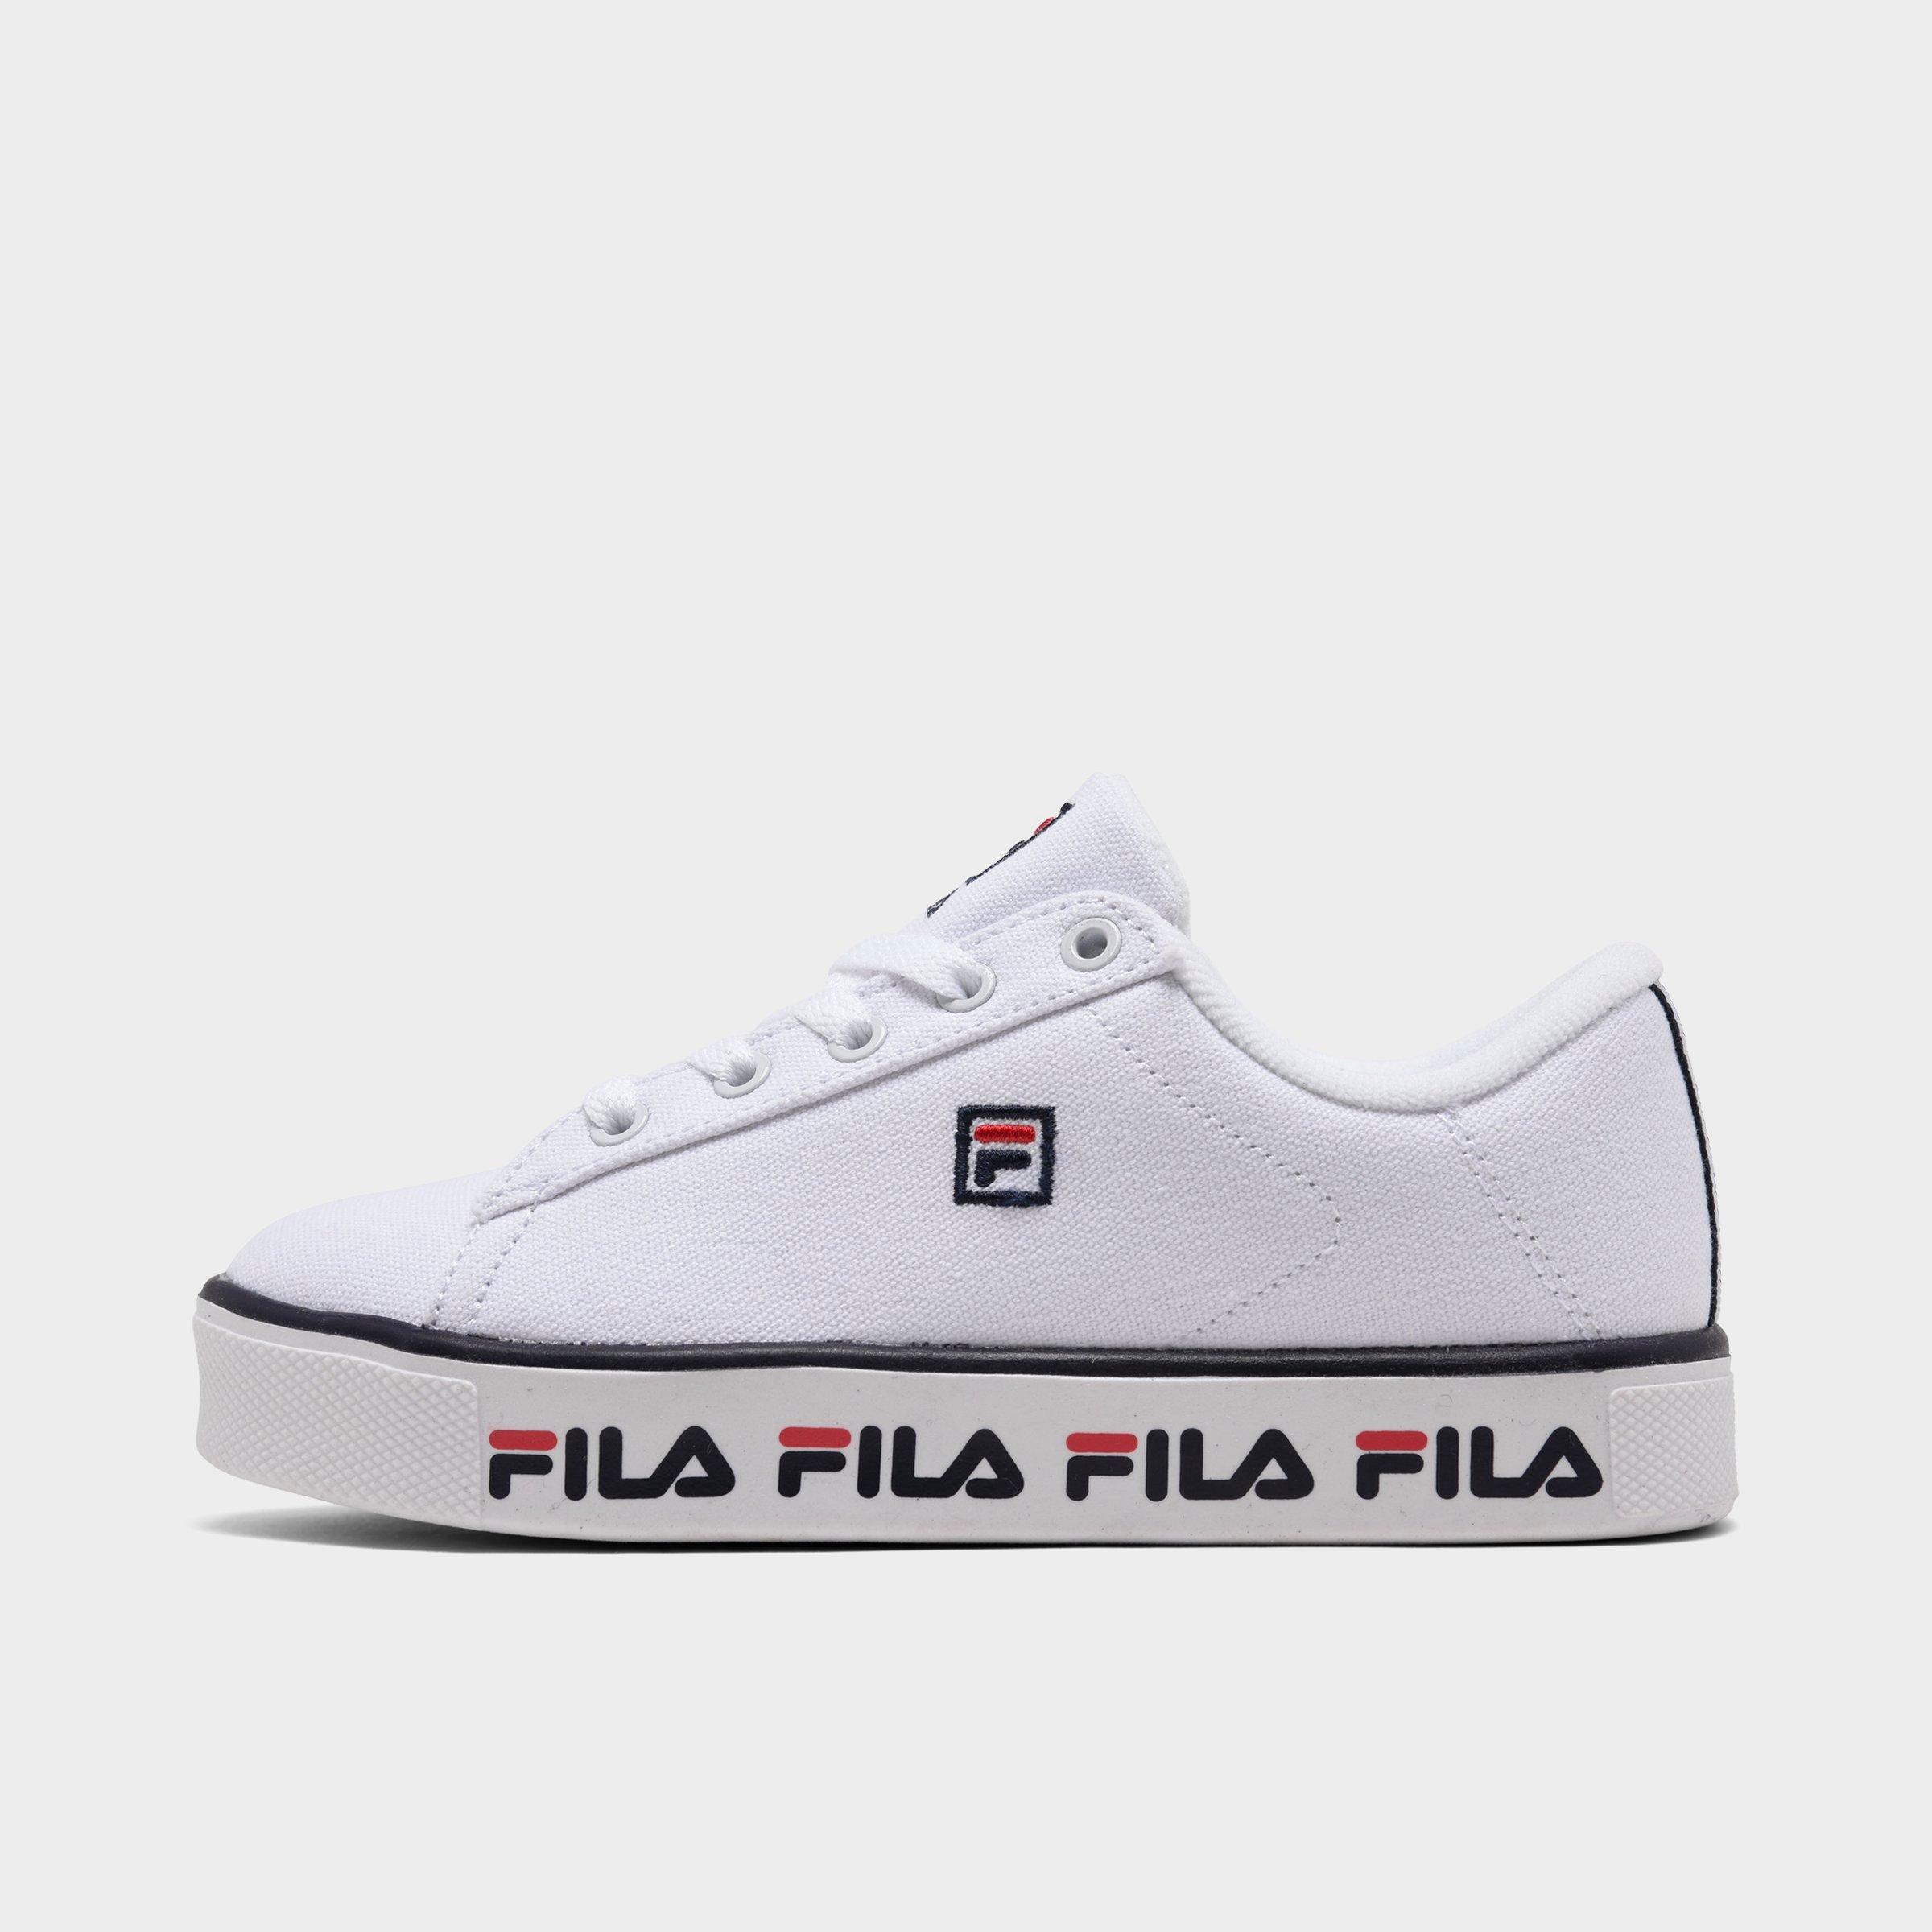 fila shoes for kids girls